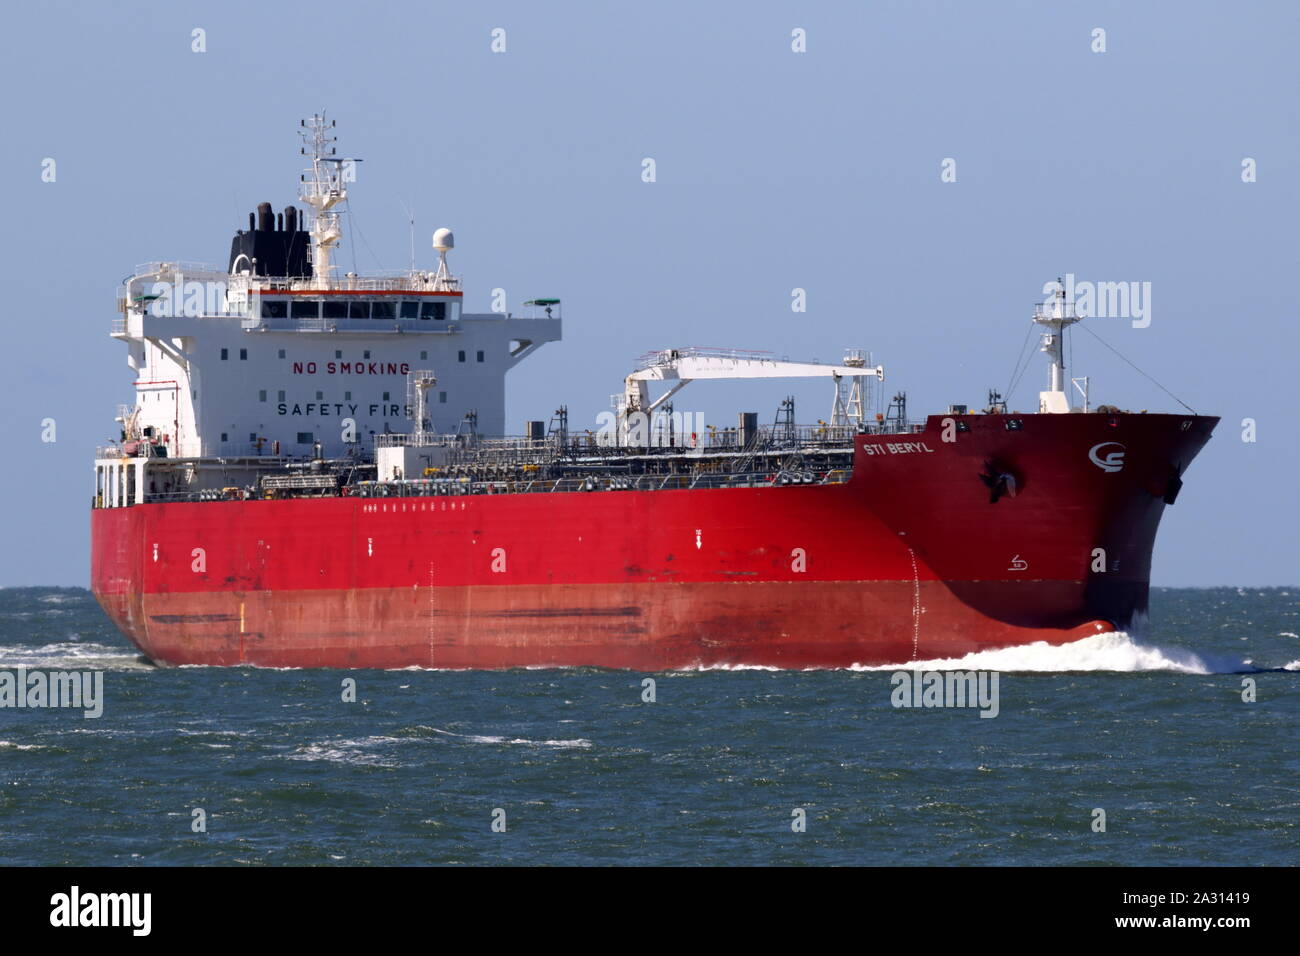 The tanker STI Beryl reaches the port of Rotterdam on 3 July 2019. Stock Photo